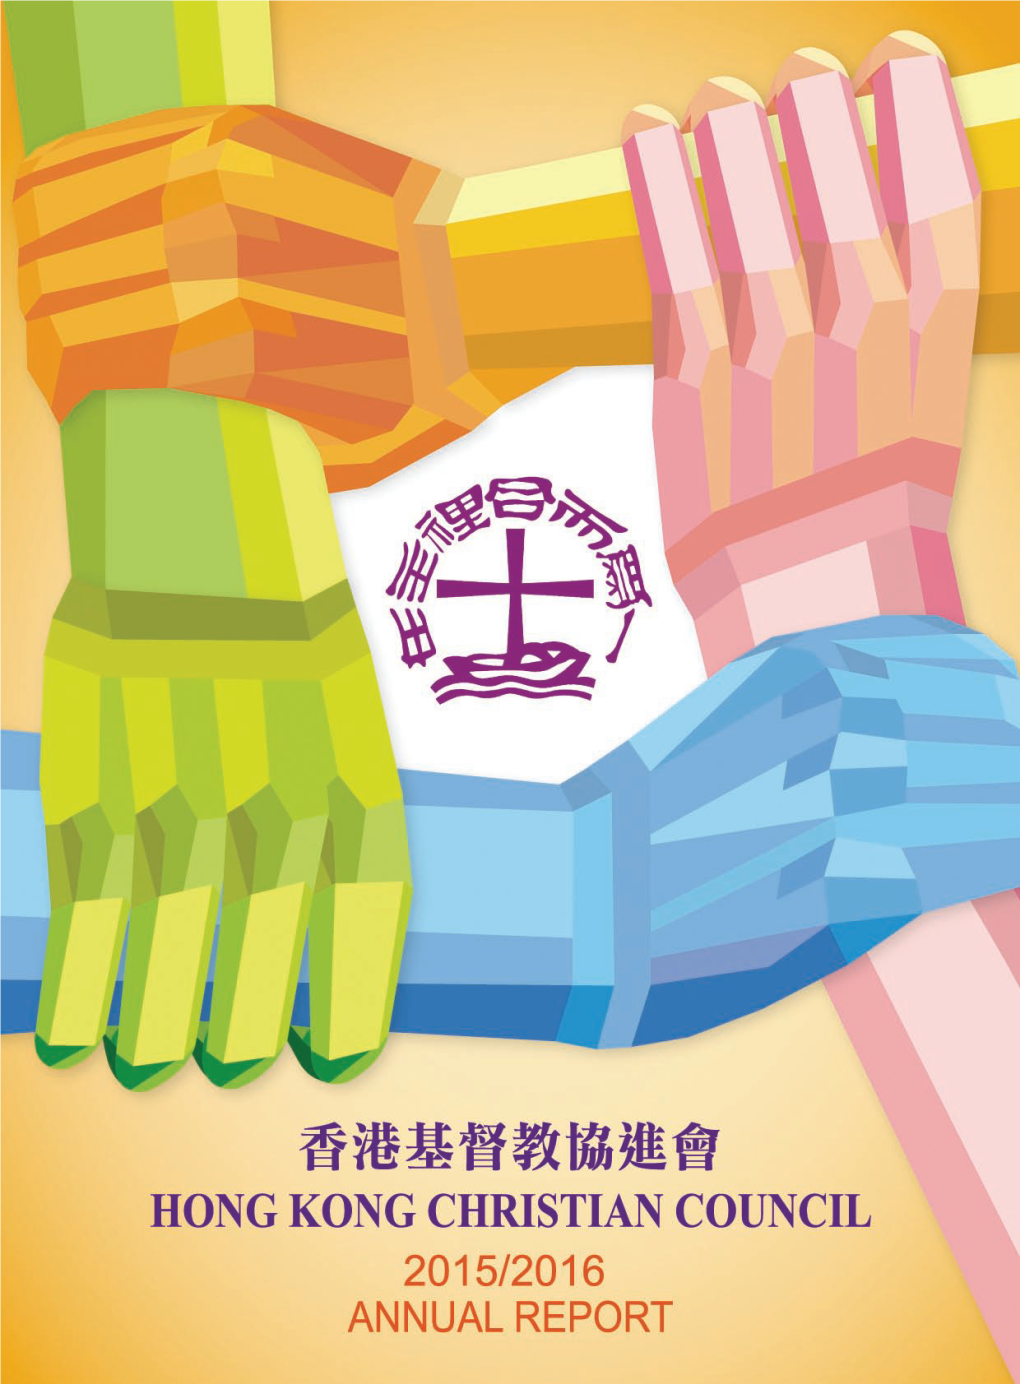 Hong Kong Christian Council